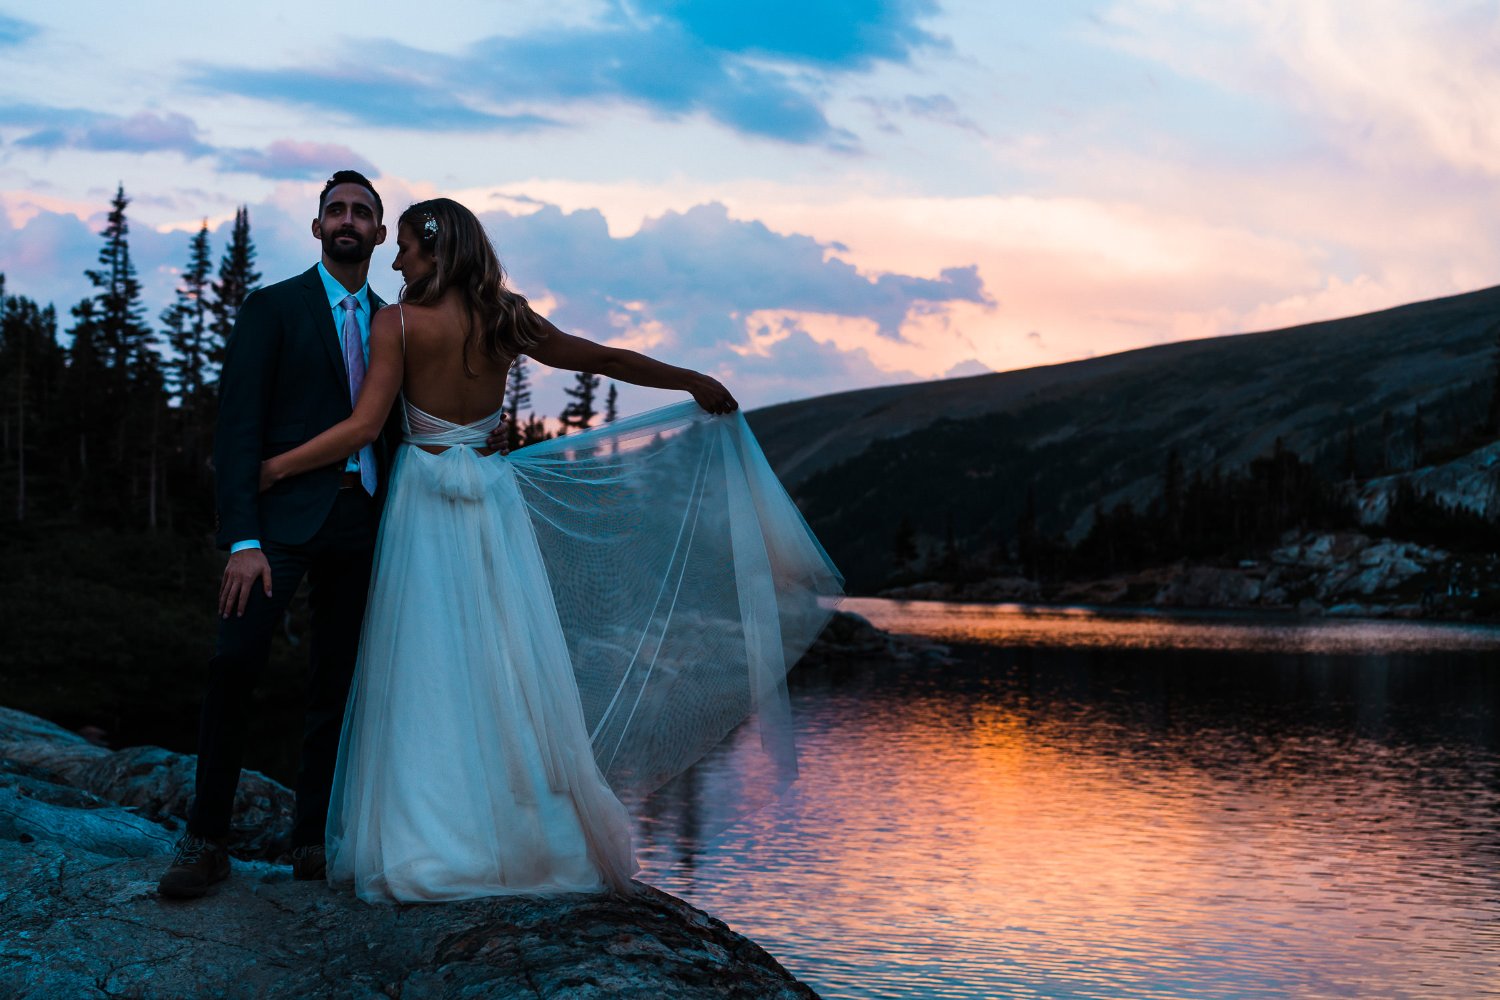 An elopement couple standing on rocks near a lake at sunset, capturing stunning photos.